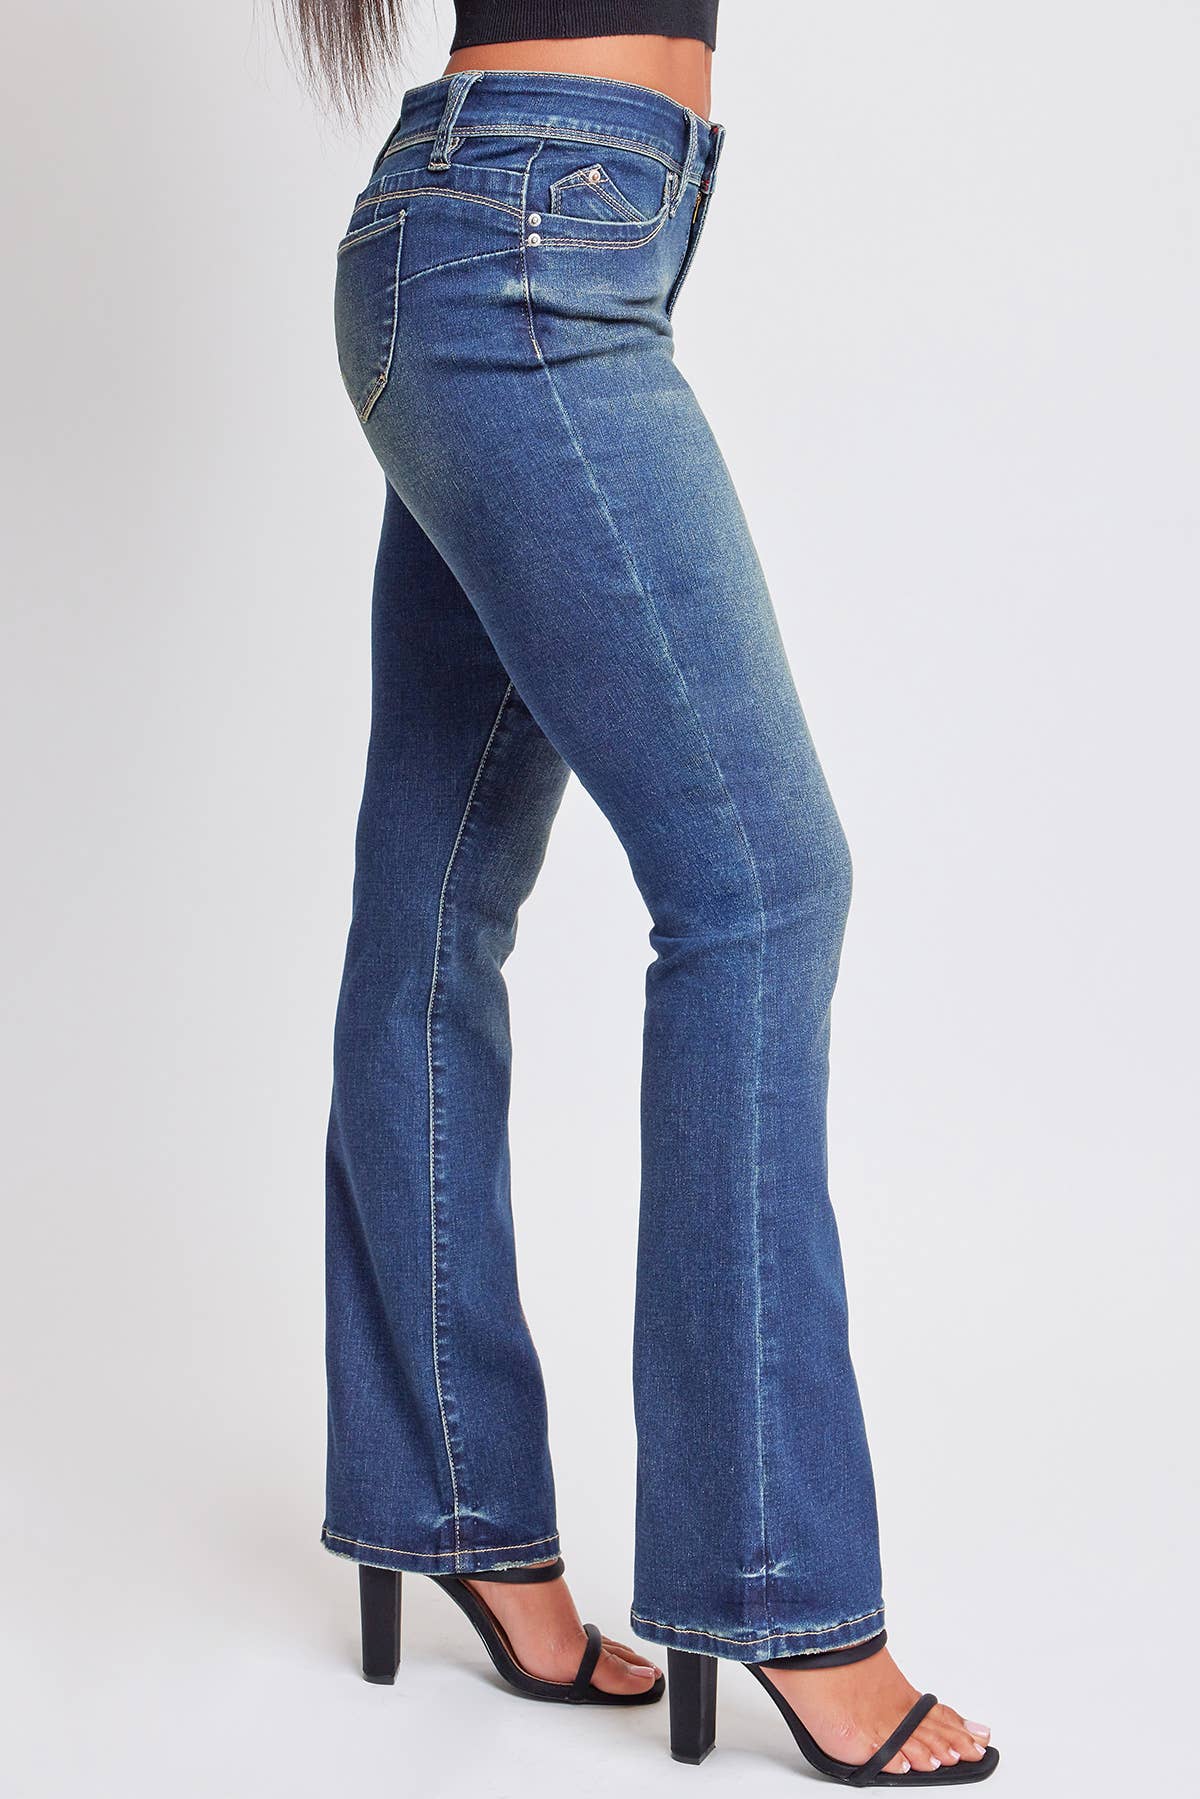 YMI Mid Rise Boot Cut Jeans ~ Medium Wash